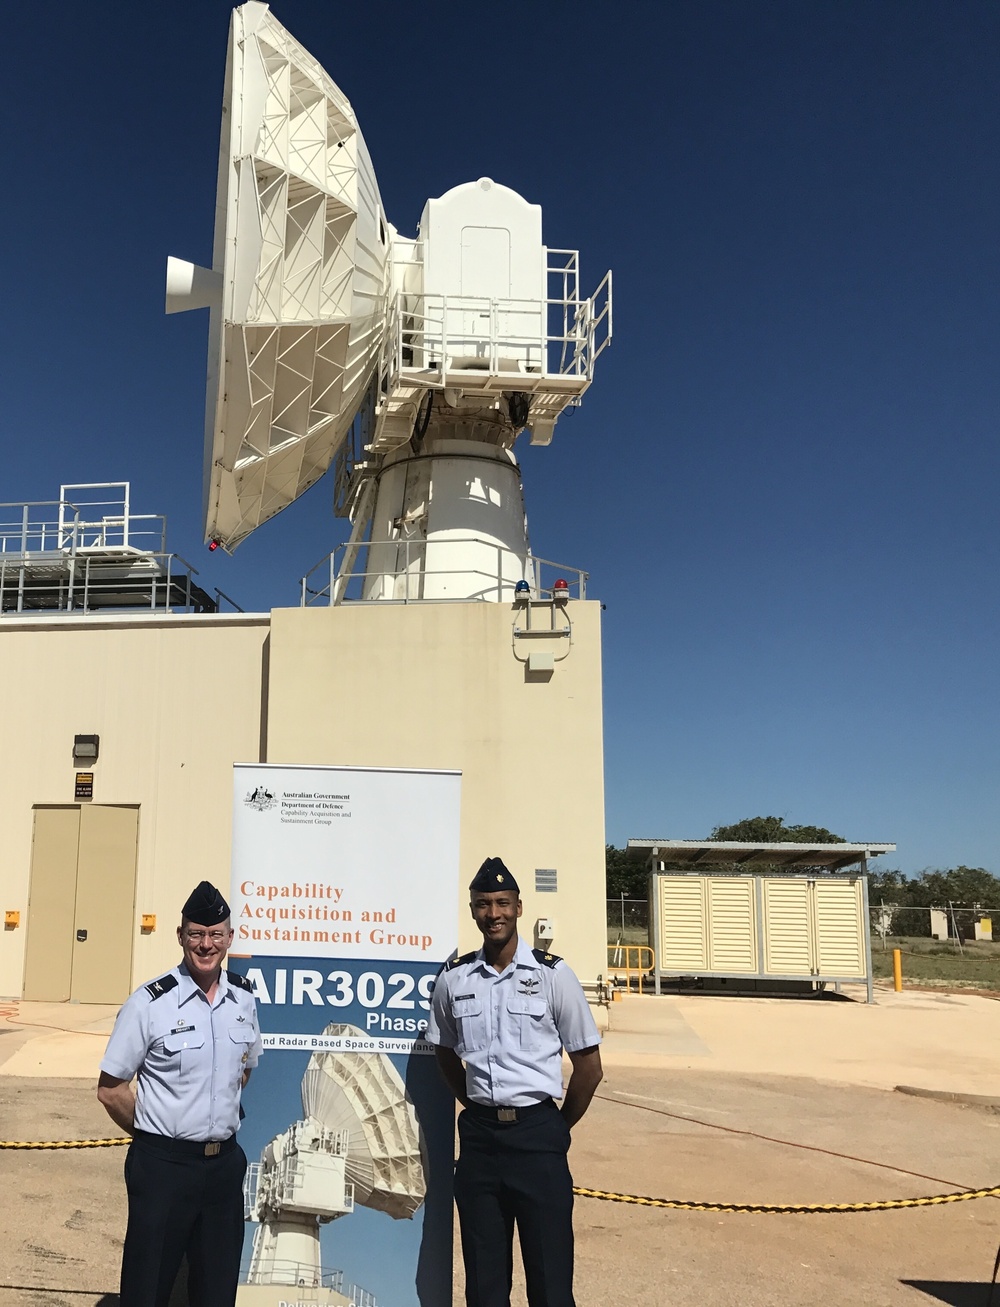 C-Band radar reaches full operational capability in Australia